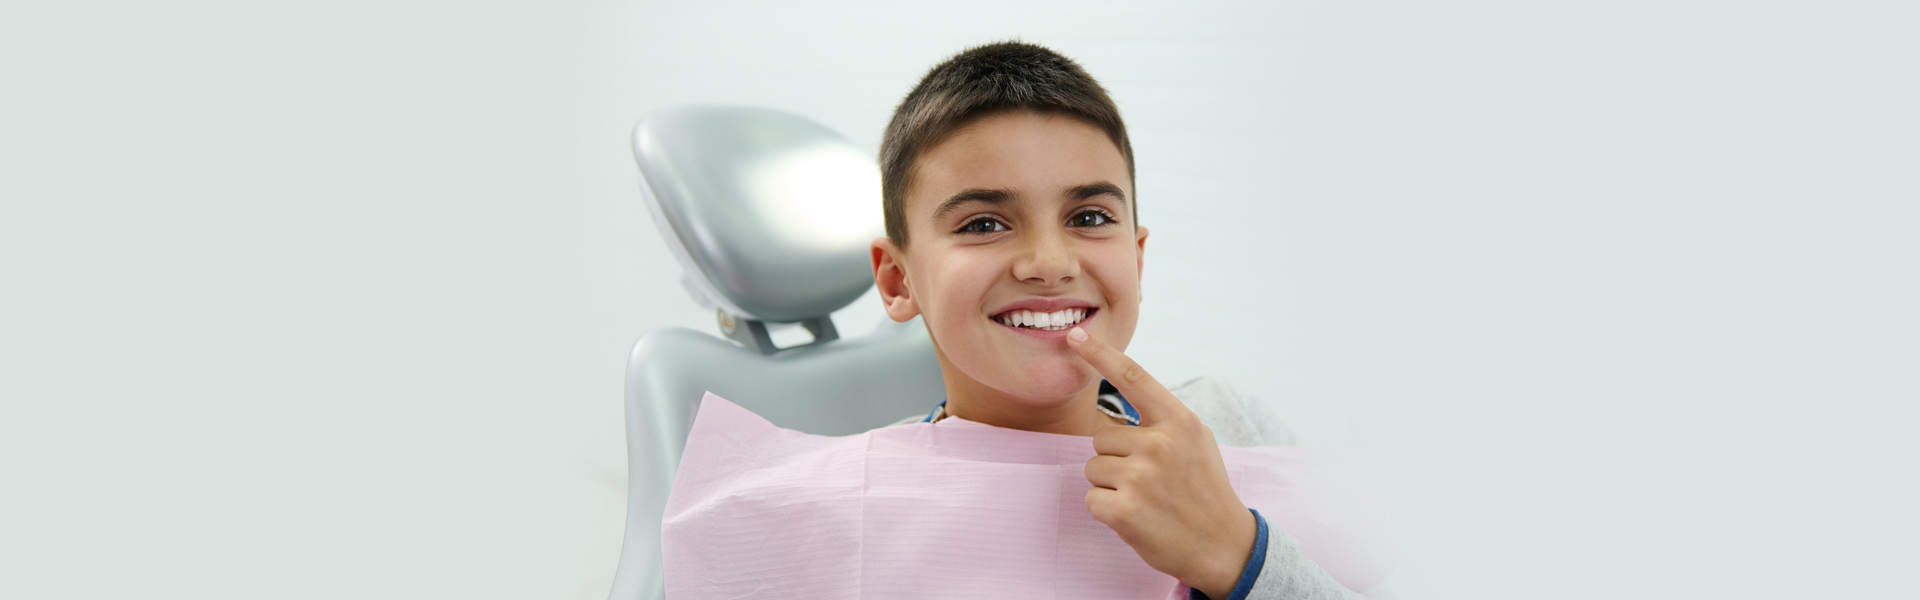 Types of Dental Sealants for Kids